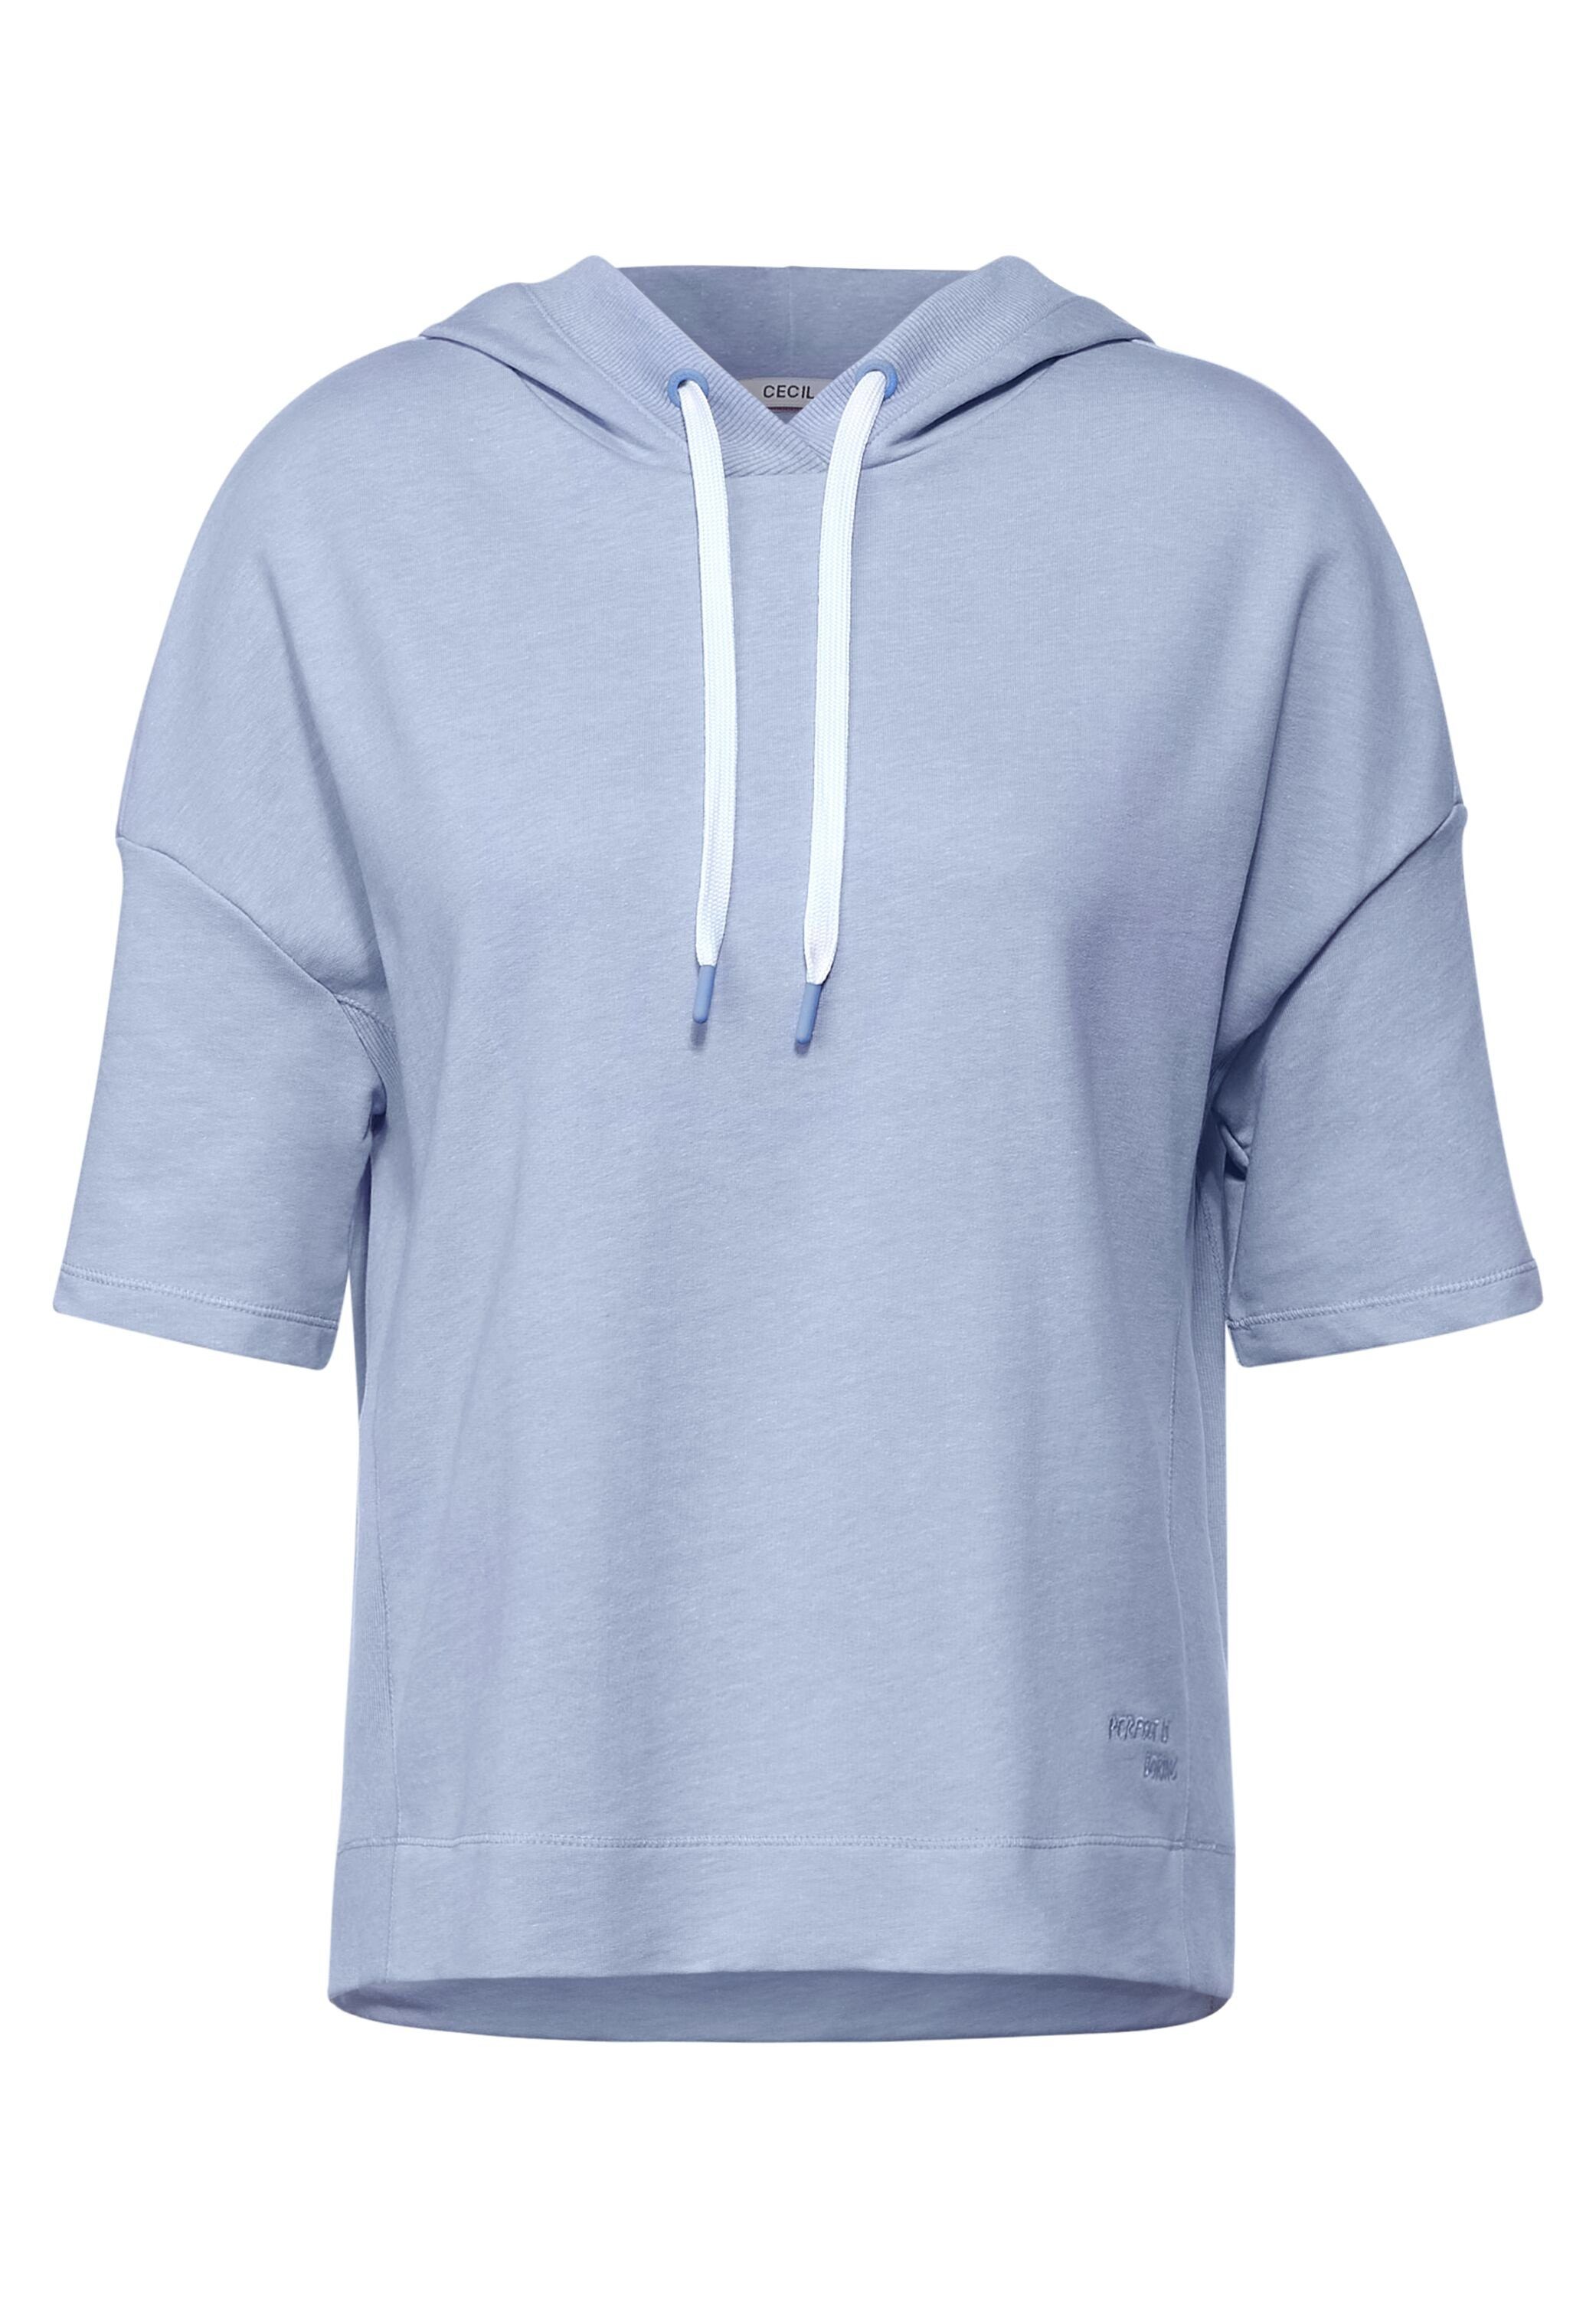 Cecil Sweatshirt Sweatshirt mit Kapuze light blue melange